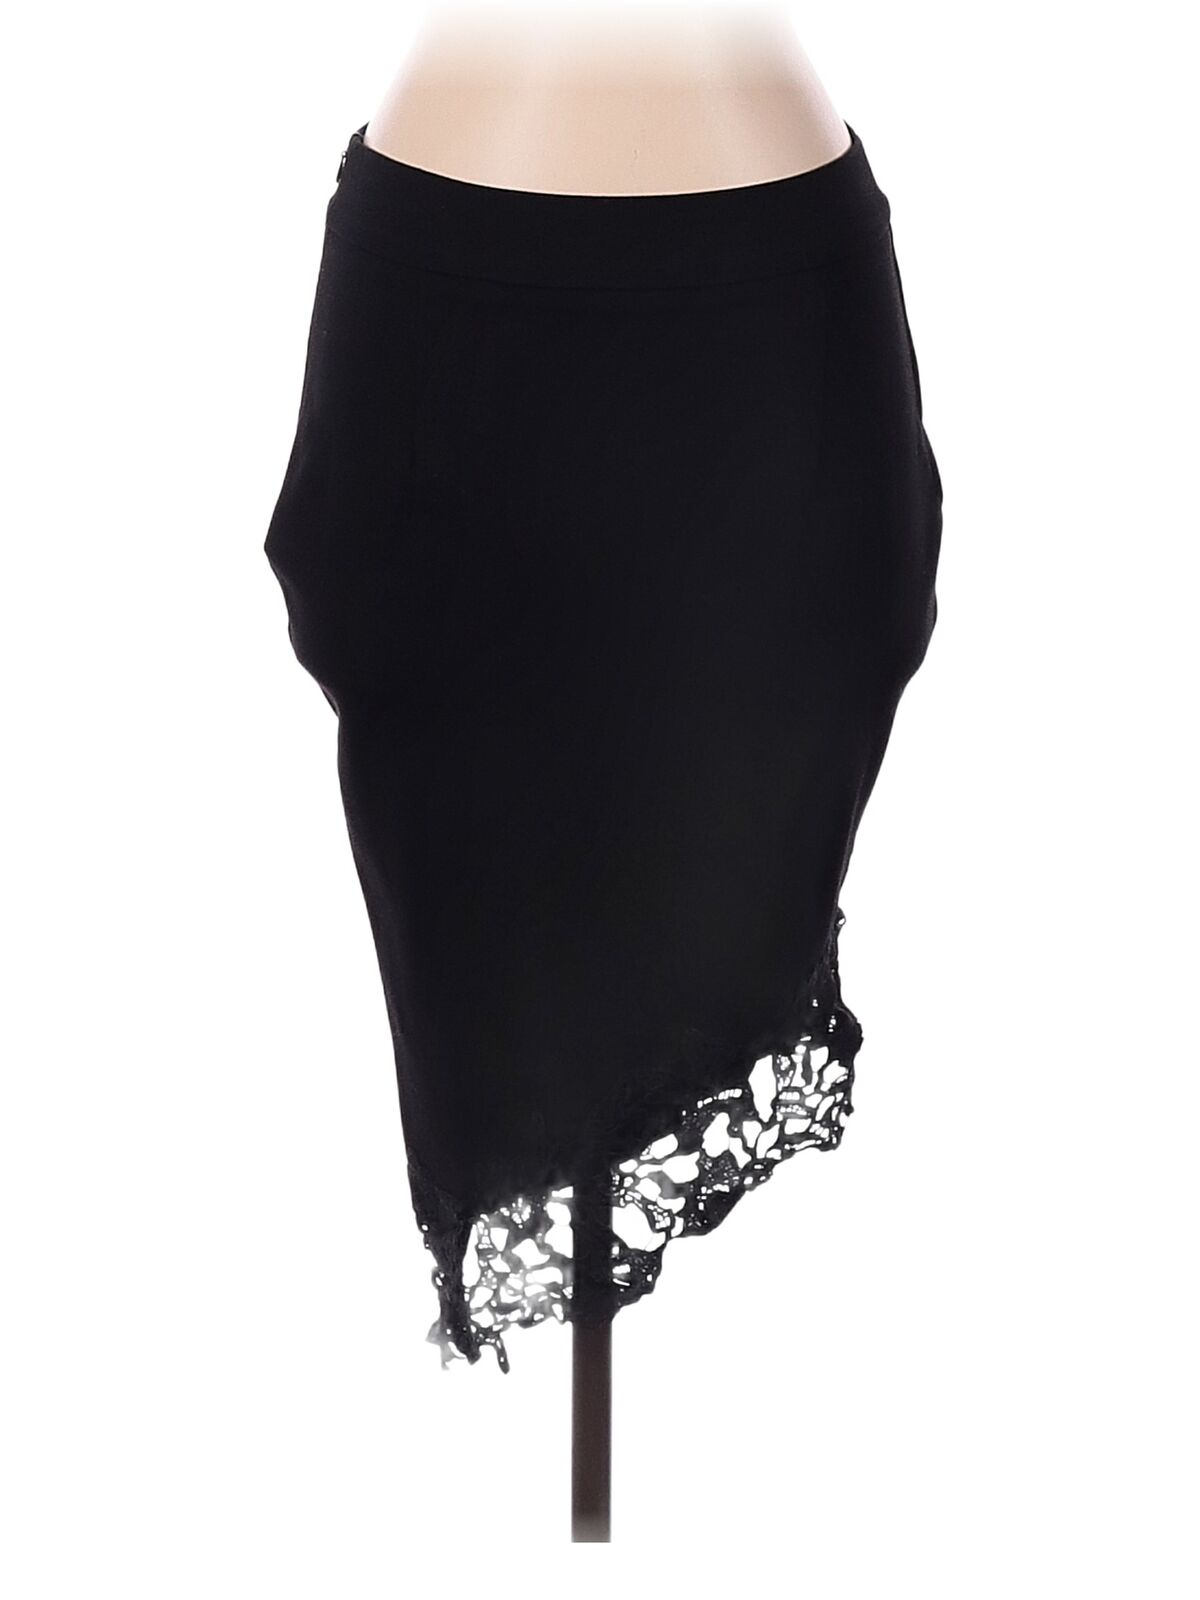 Patty Boutik Women Black Casual Skirt S - image 1